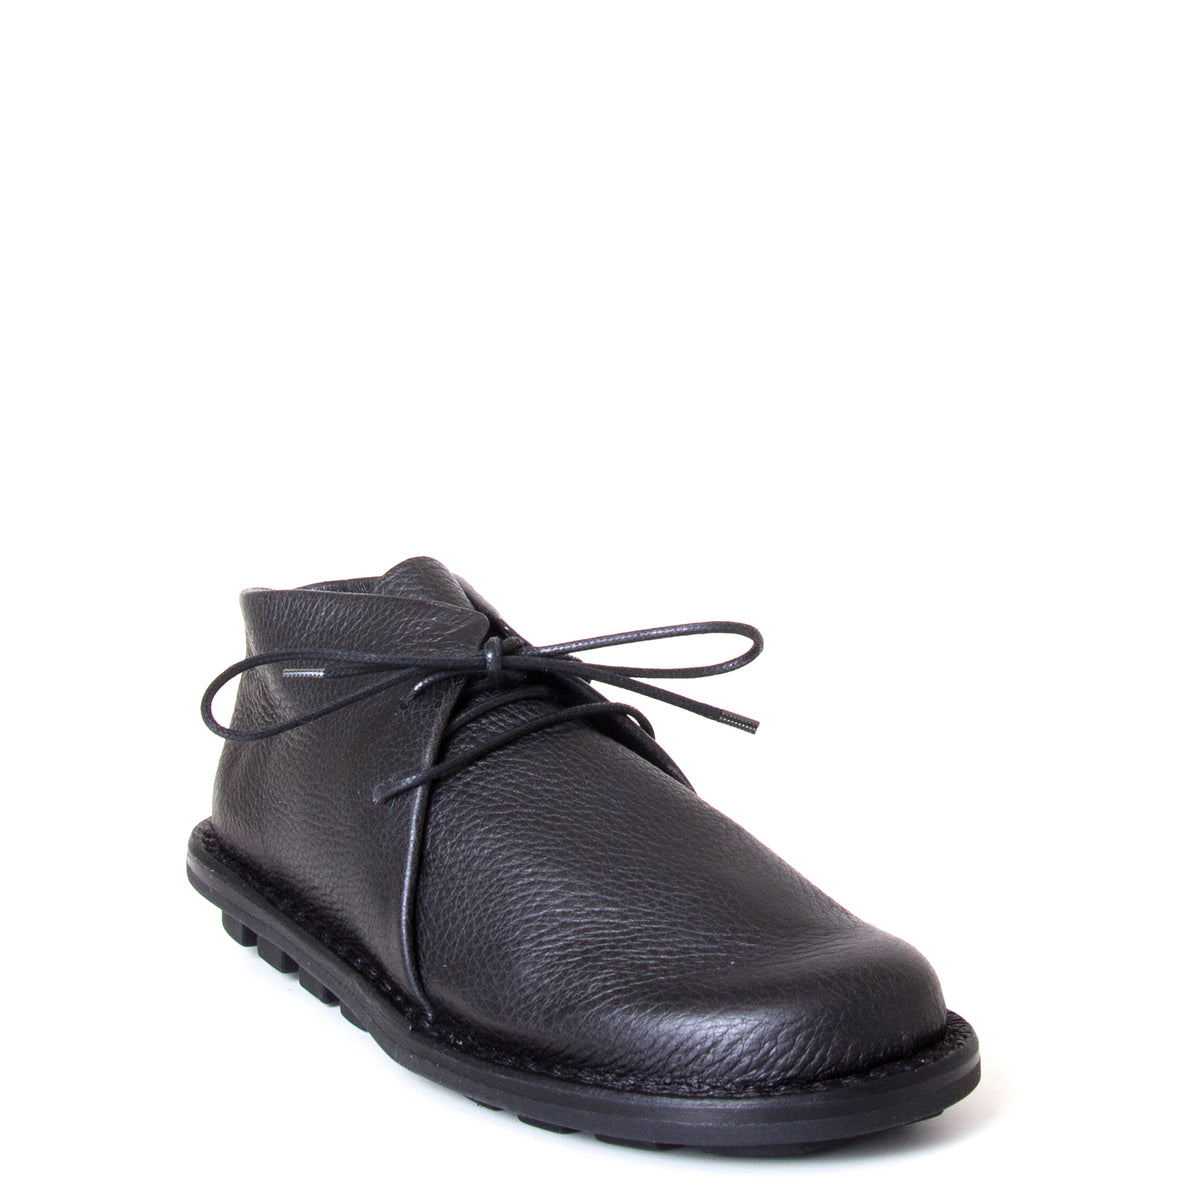 Trippen Again. Women's laced shoes Black leather upper, flexible